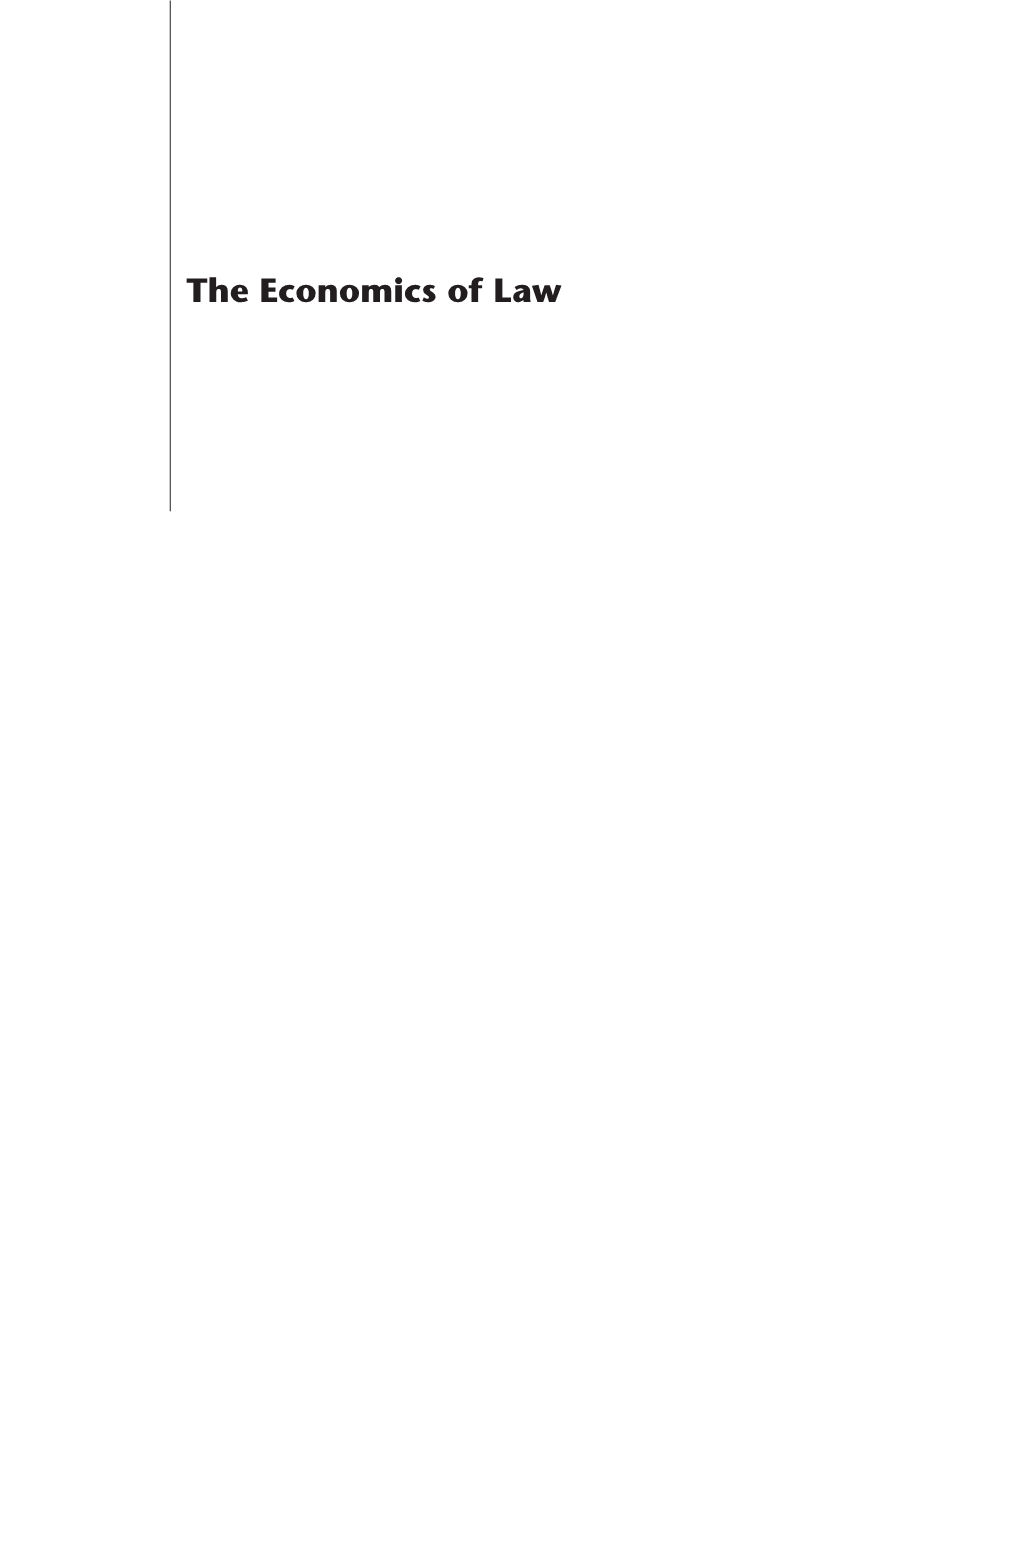 Economics of Law.Indb